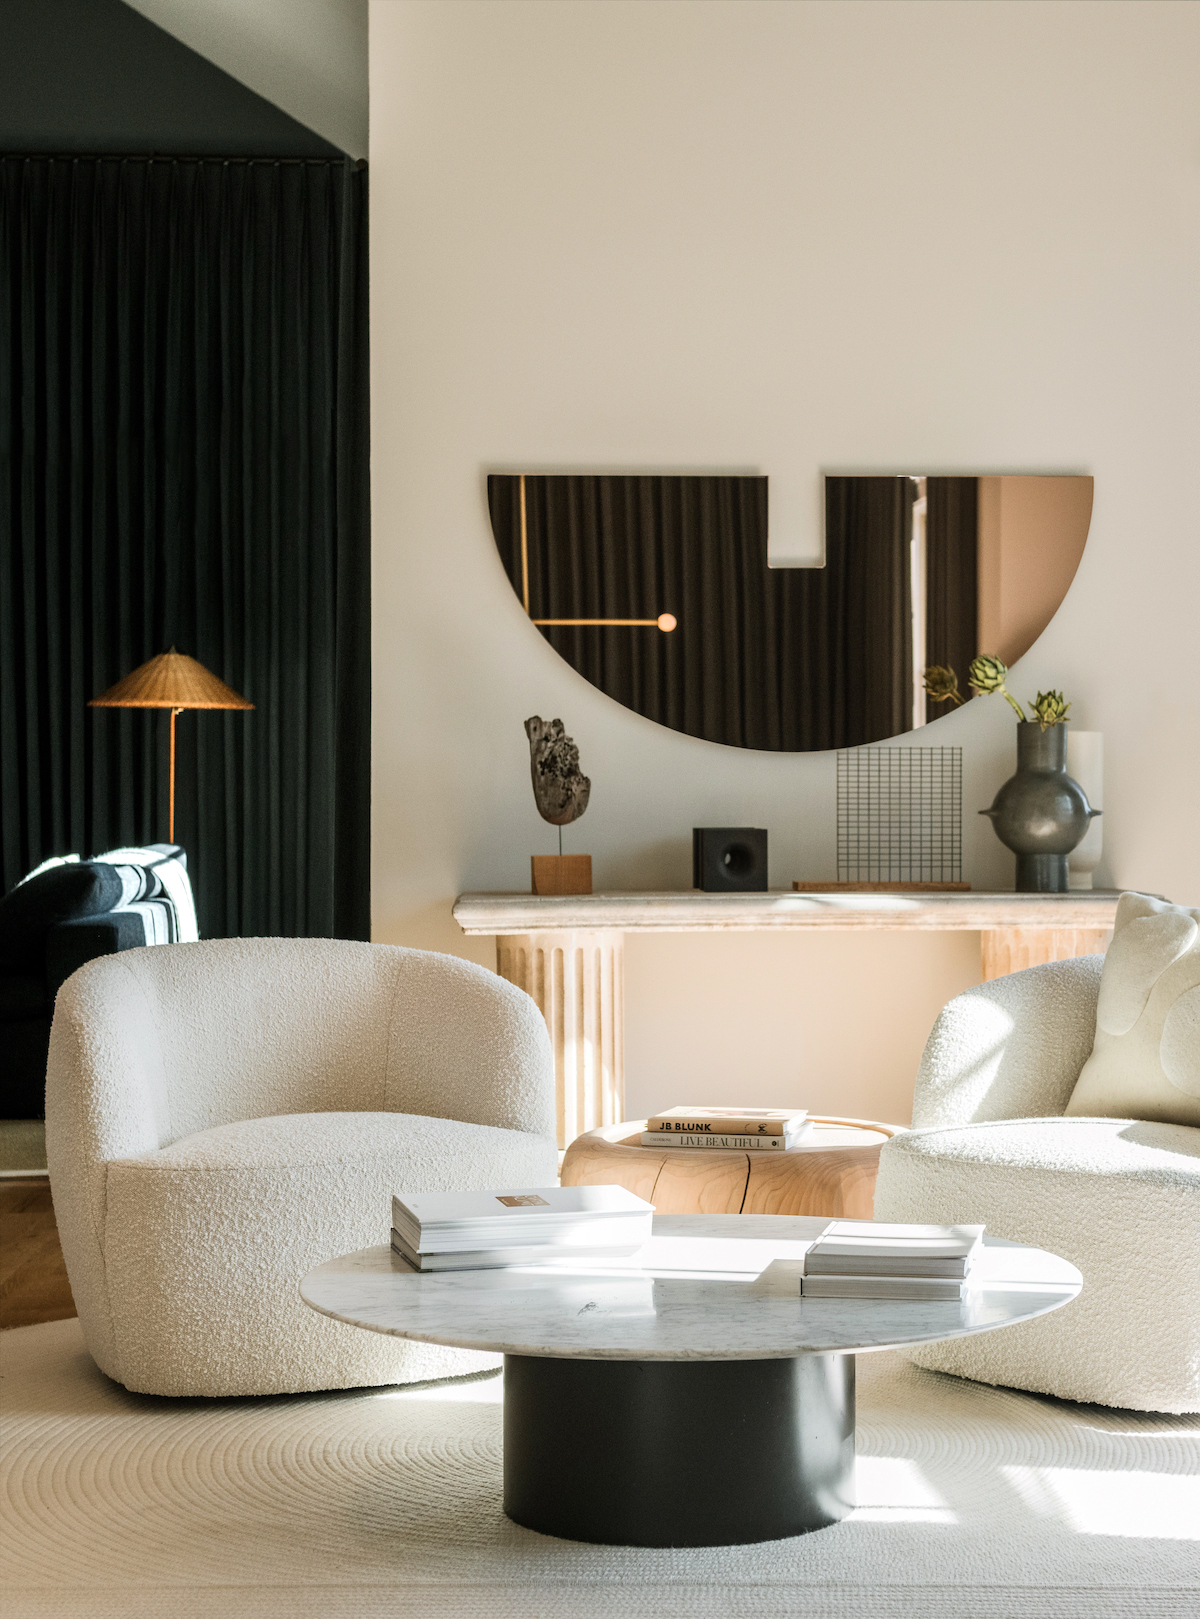 Living room interior designed by Studio AHEAD in Effect Magazine